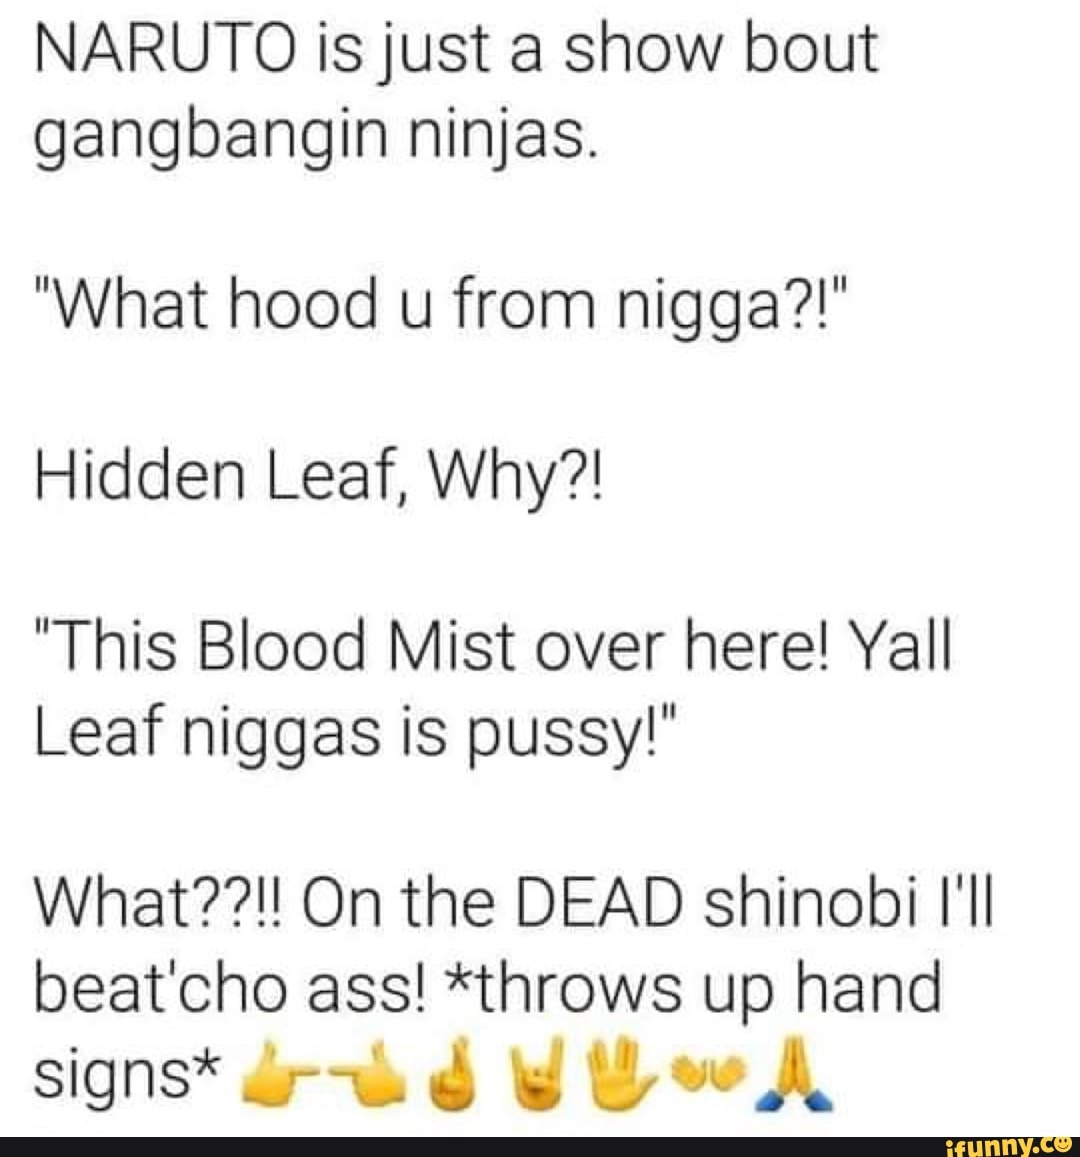 NARUTO is just a show bout gangbangin ninjas. "What hood u from nigga